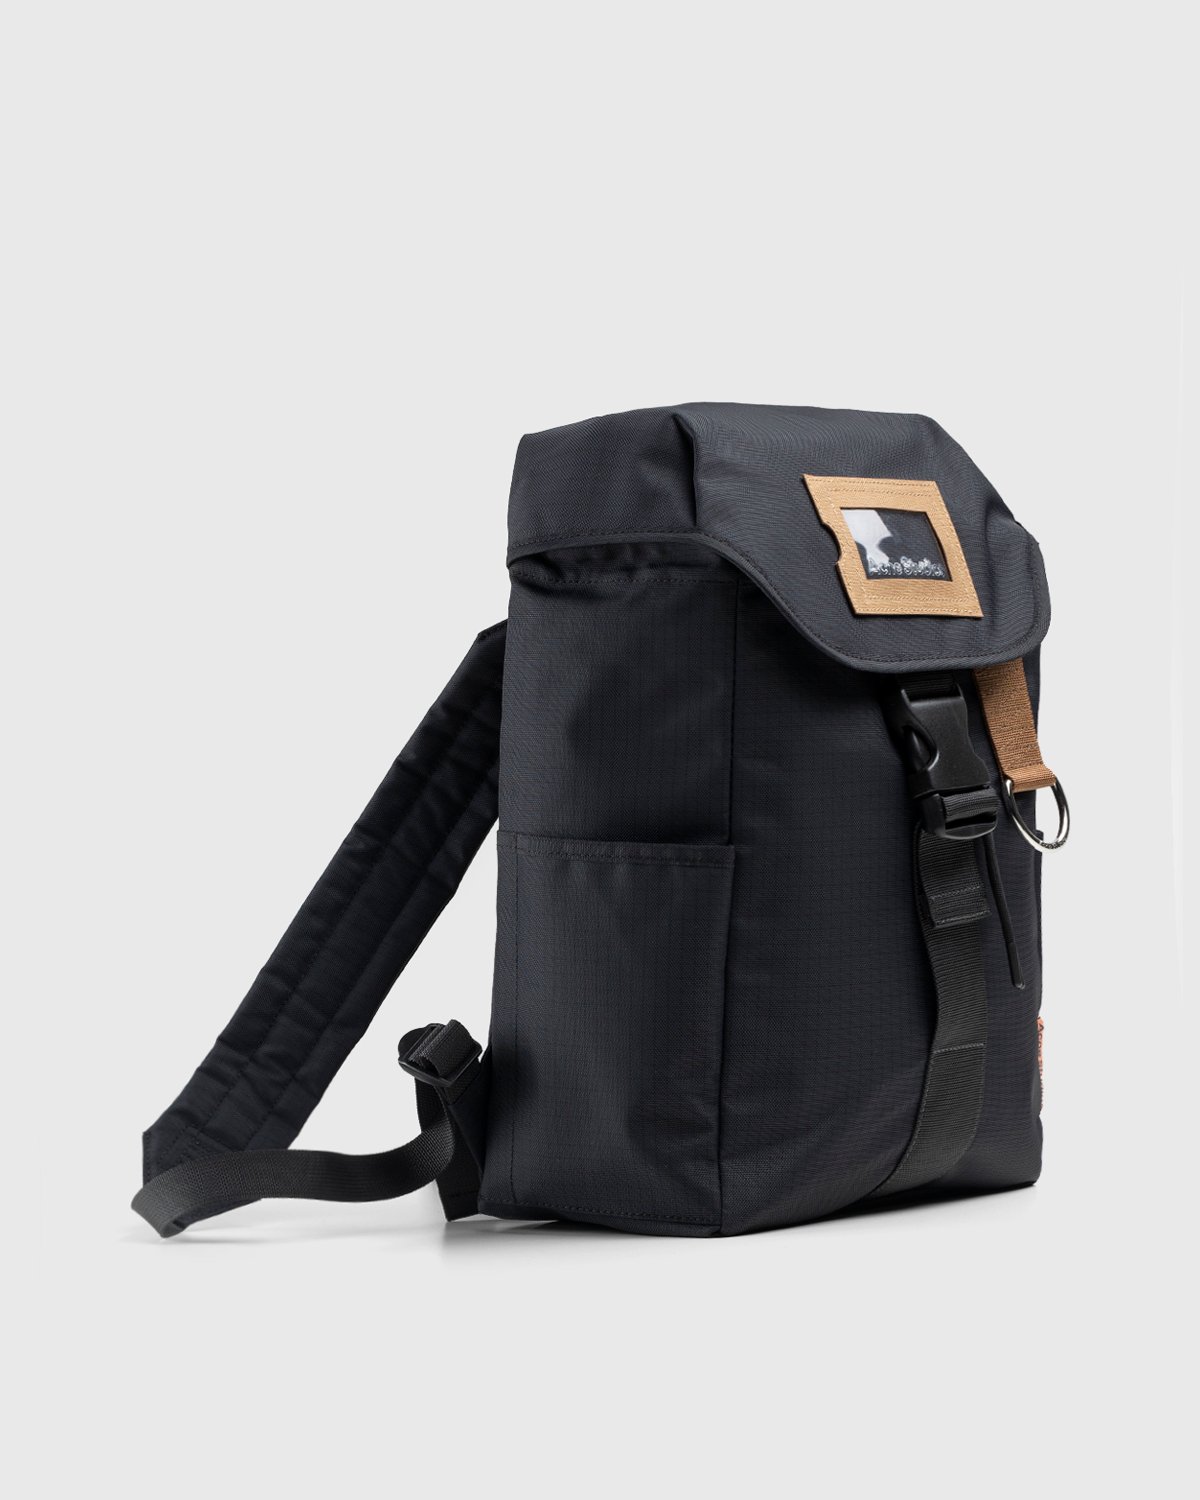 Acne Studios - Large Ripstop Backpack Black/Khaki Green - Accessories - Black - Image 2